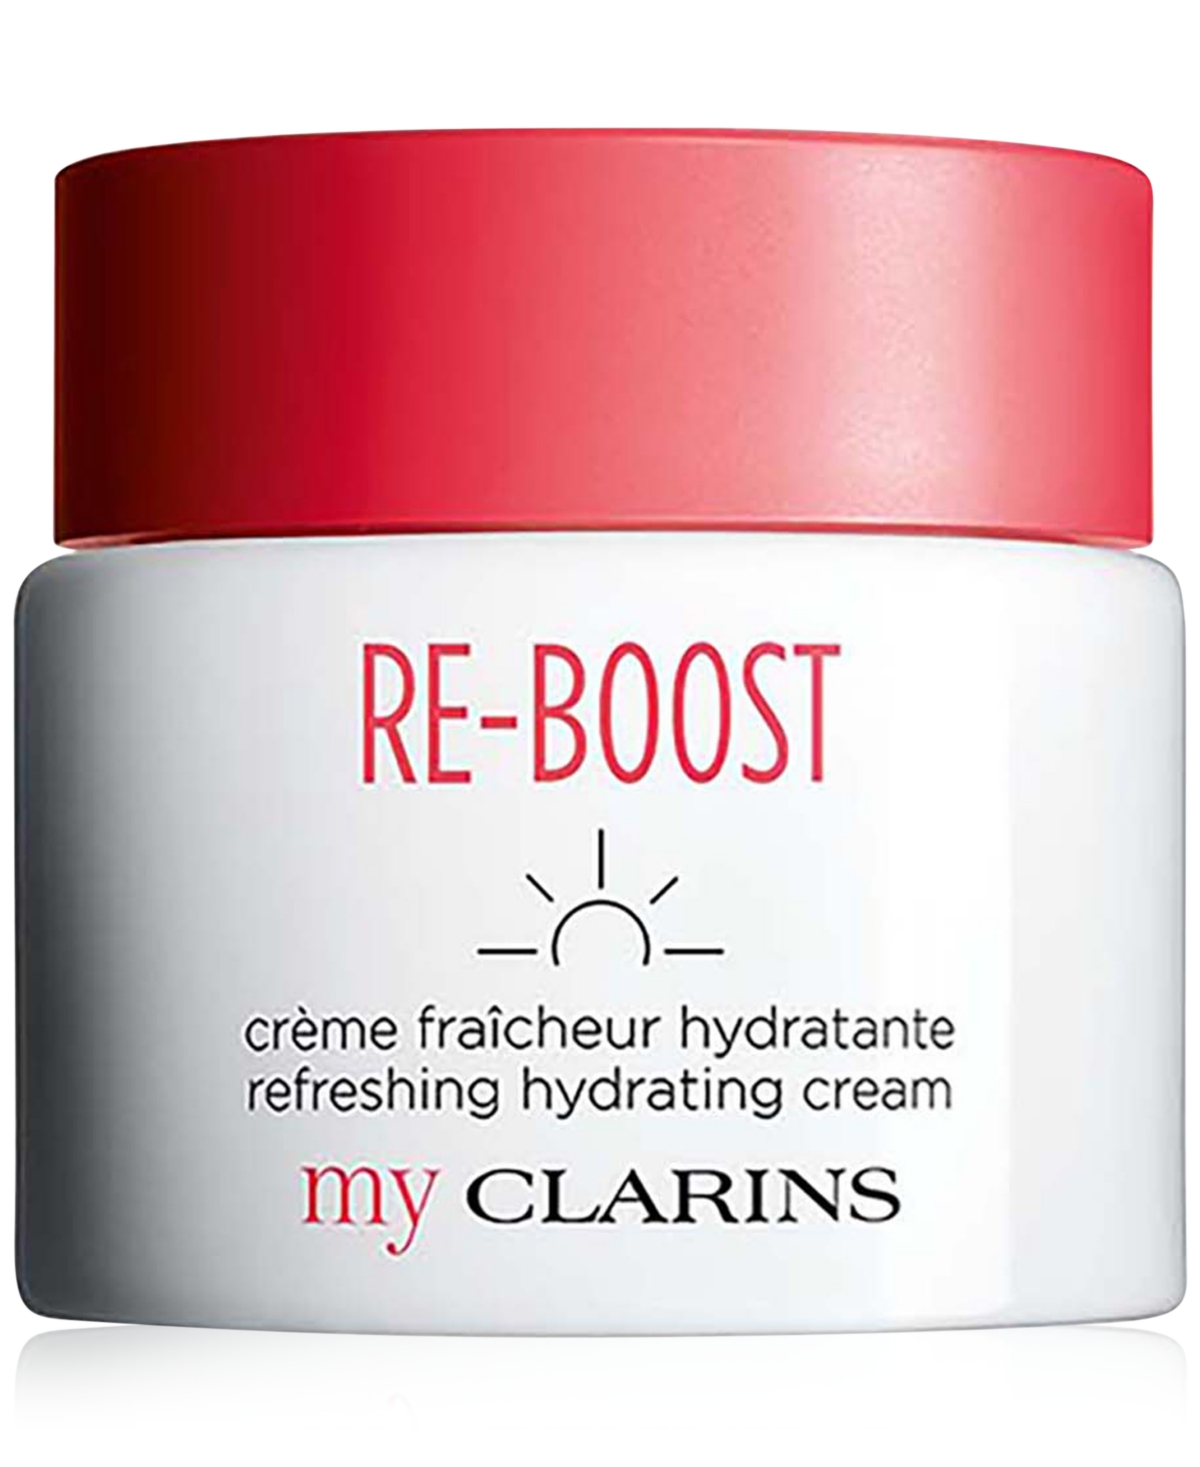 My Clarins Re-boost Refreshing Hydrating Cream